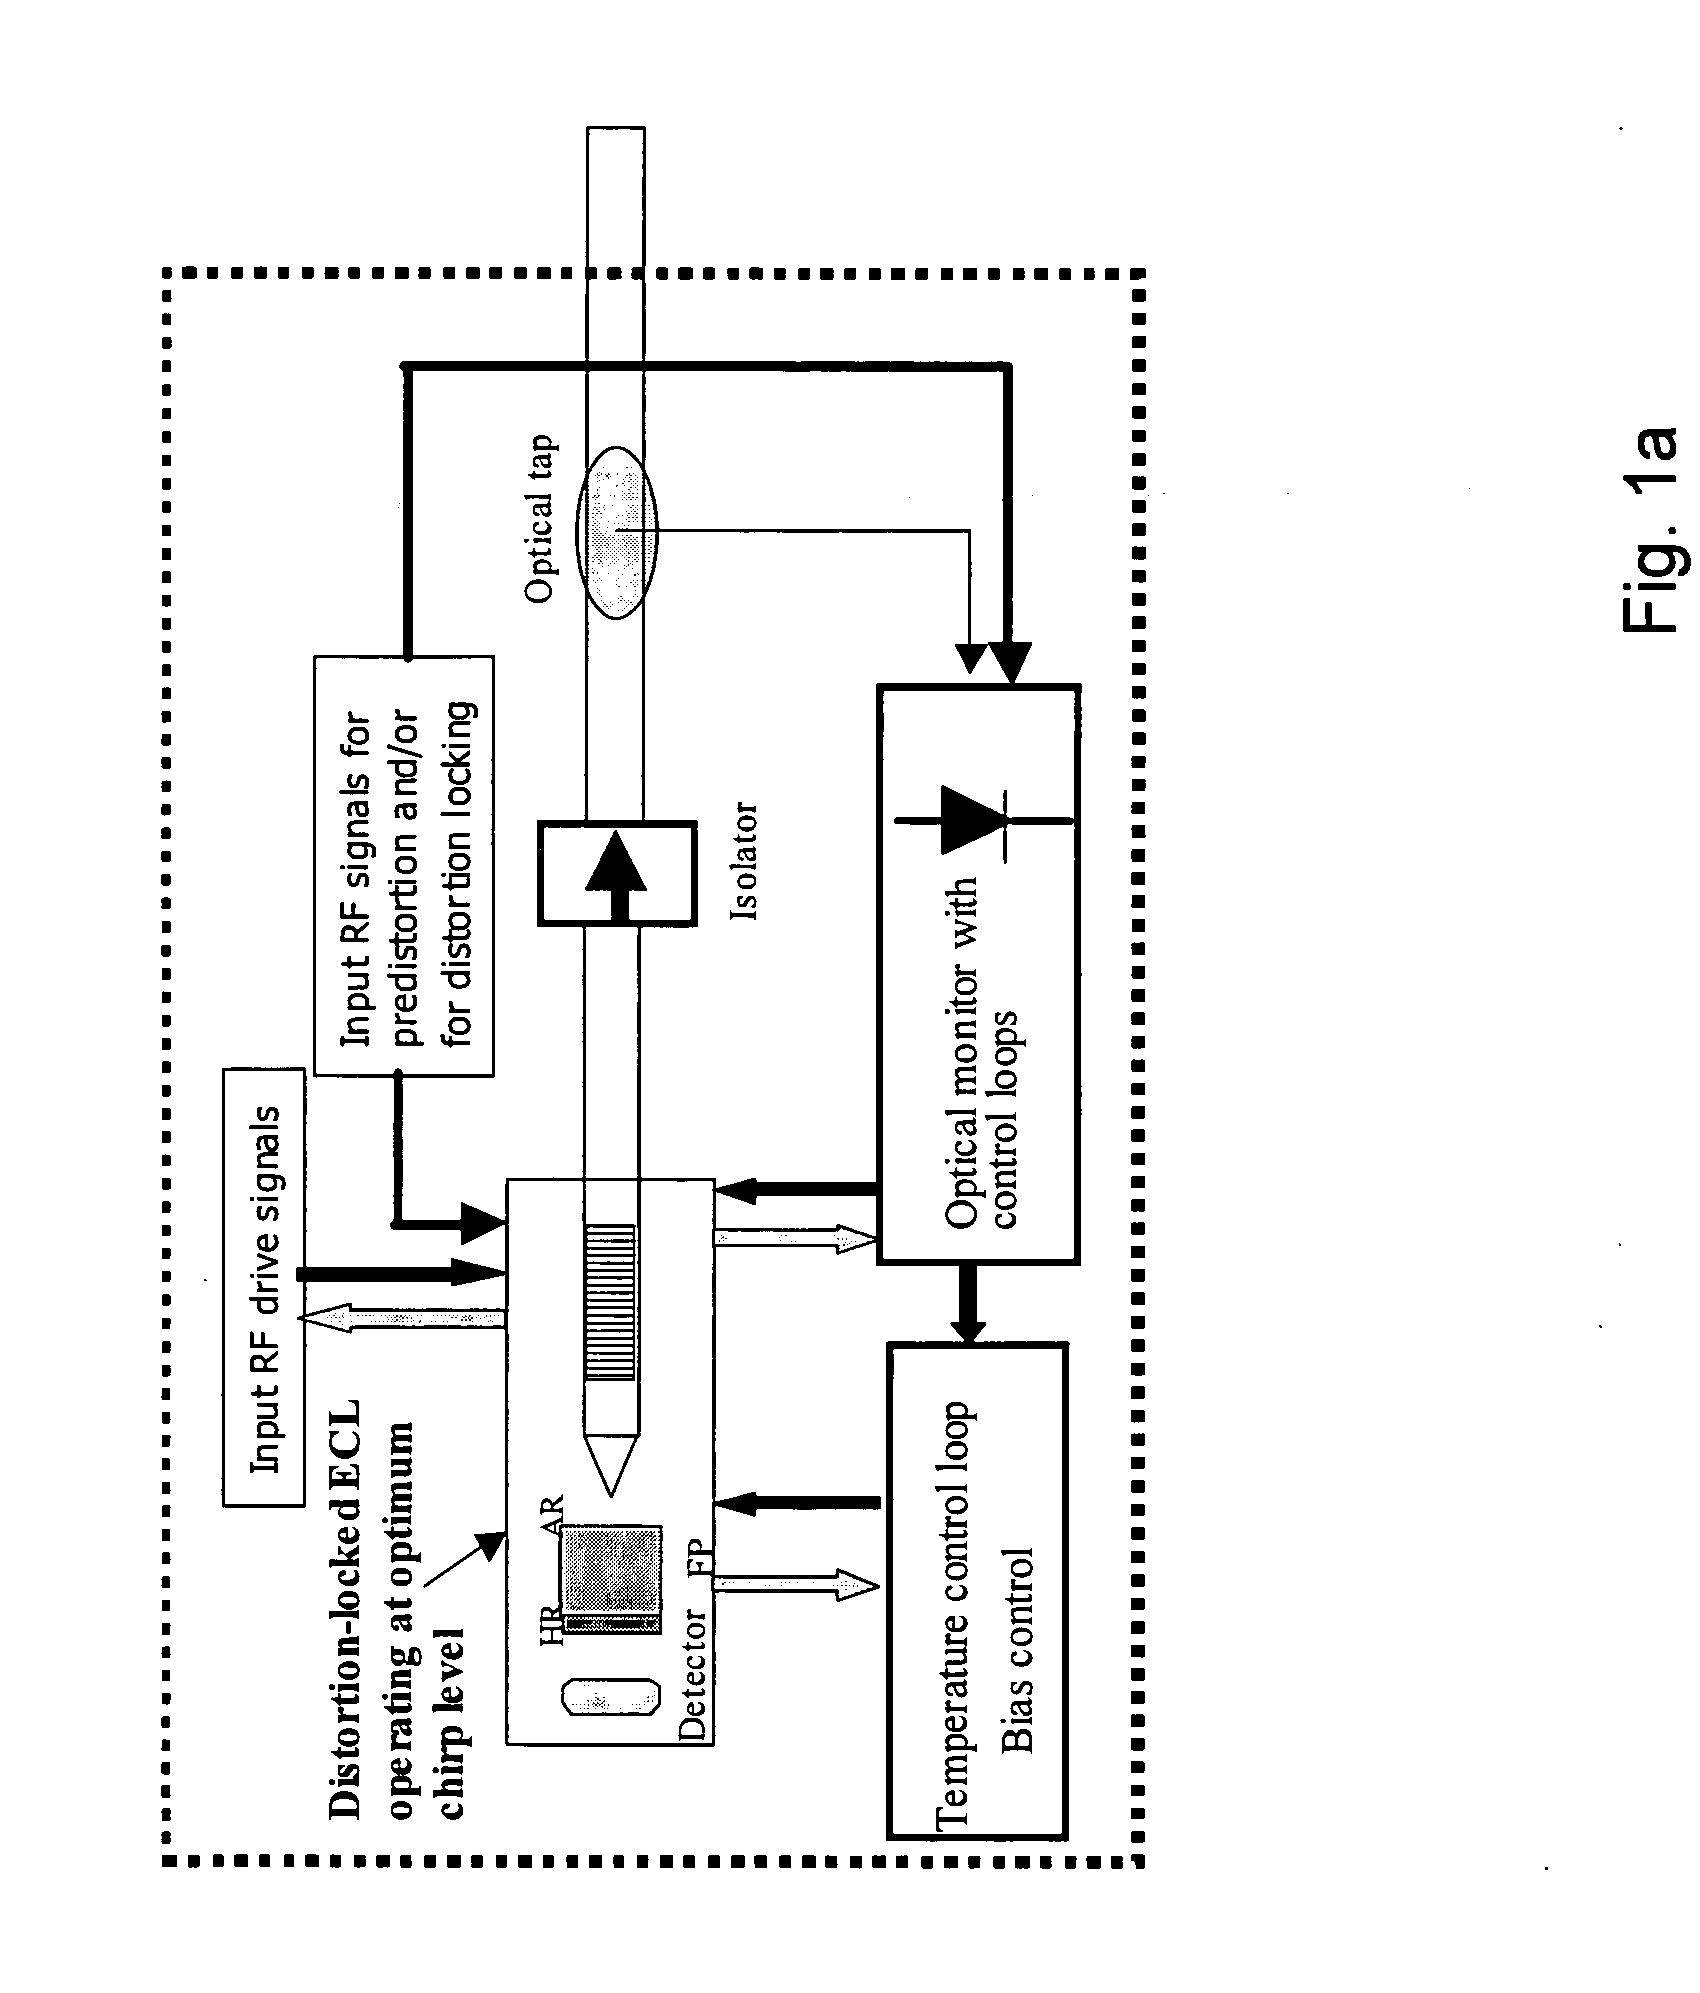 Analog transmitter using an external cavity laser (ECL)